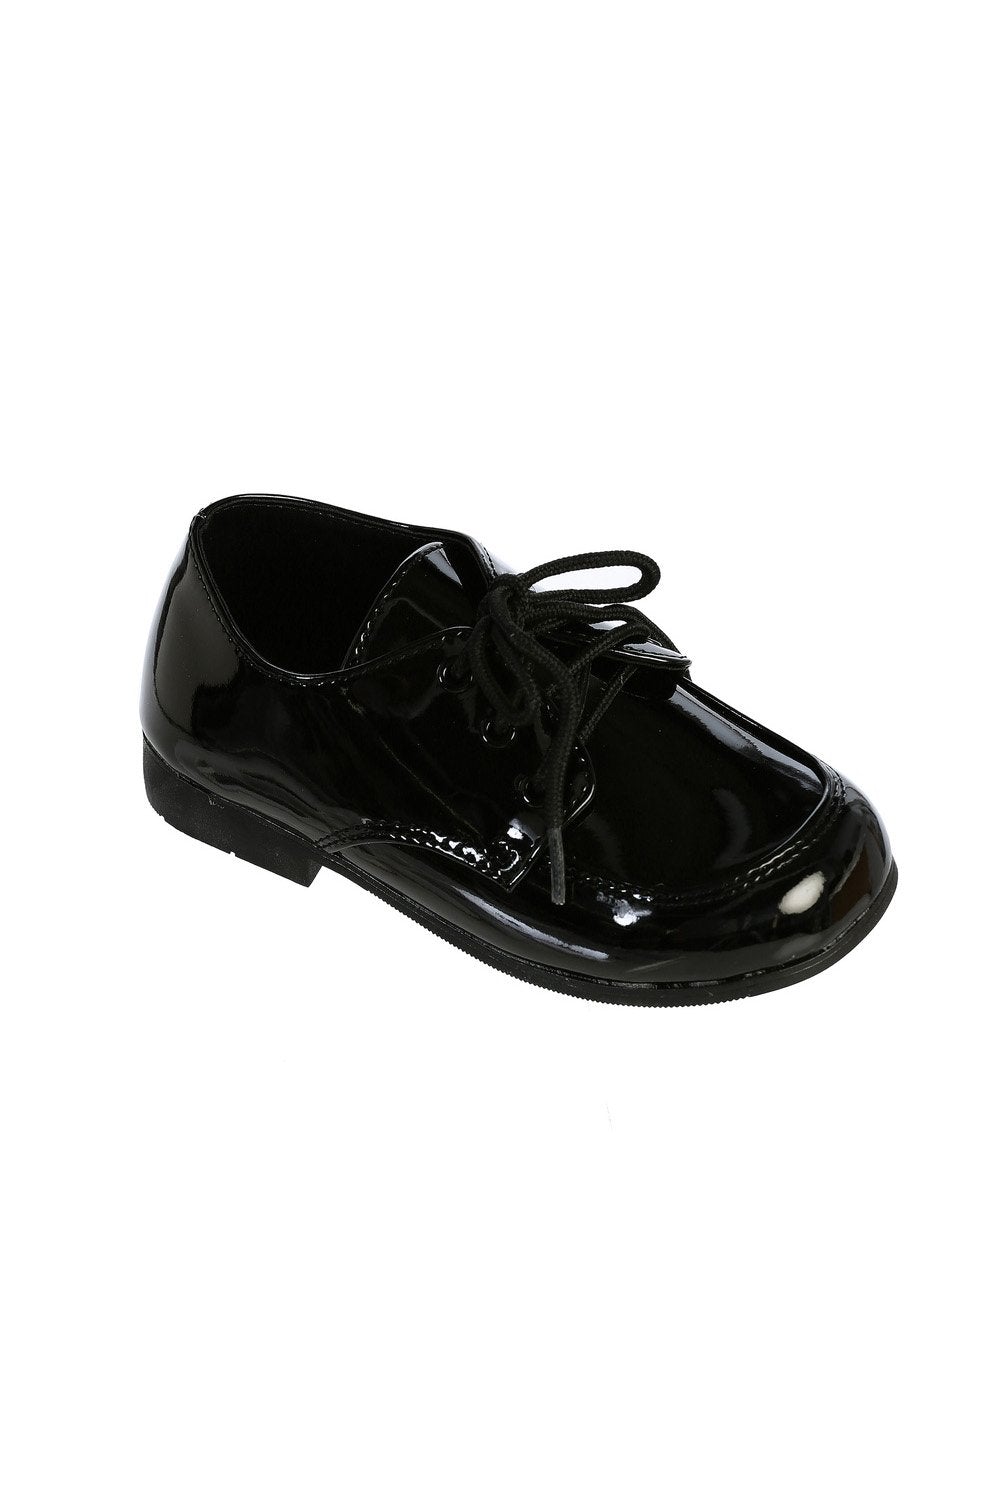 Tip Top "Berkeley" Kids Black Moc-Toe Oxford Tuxedo Shoes